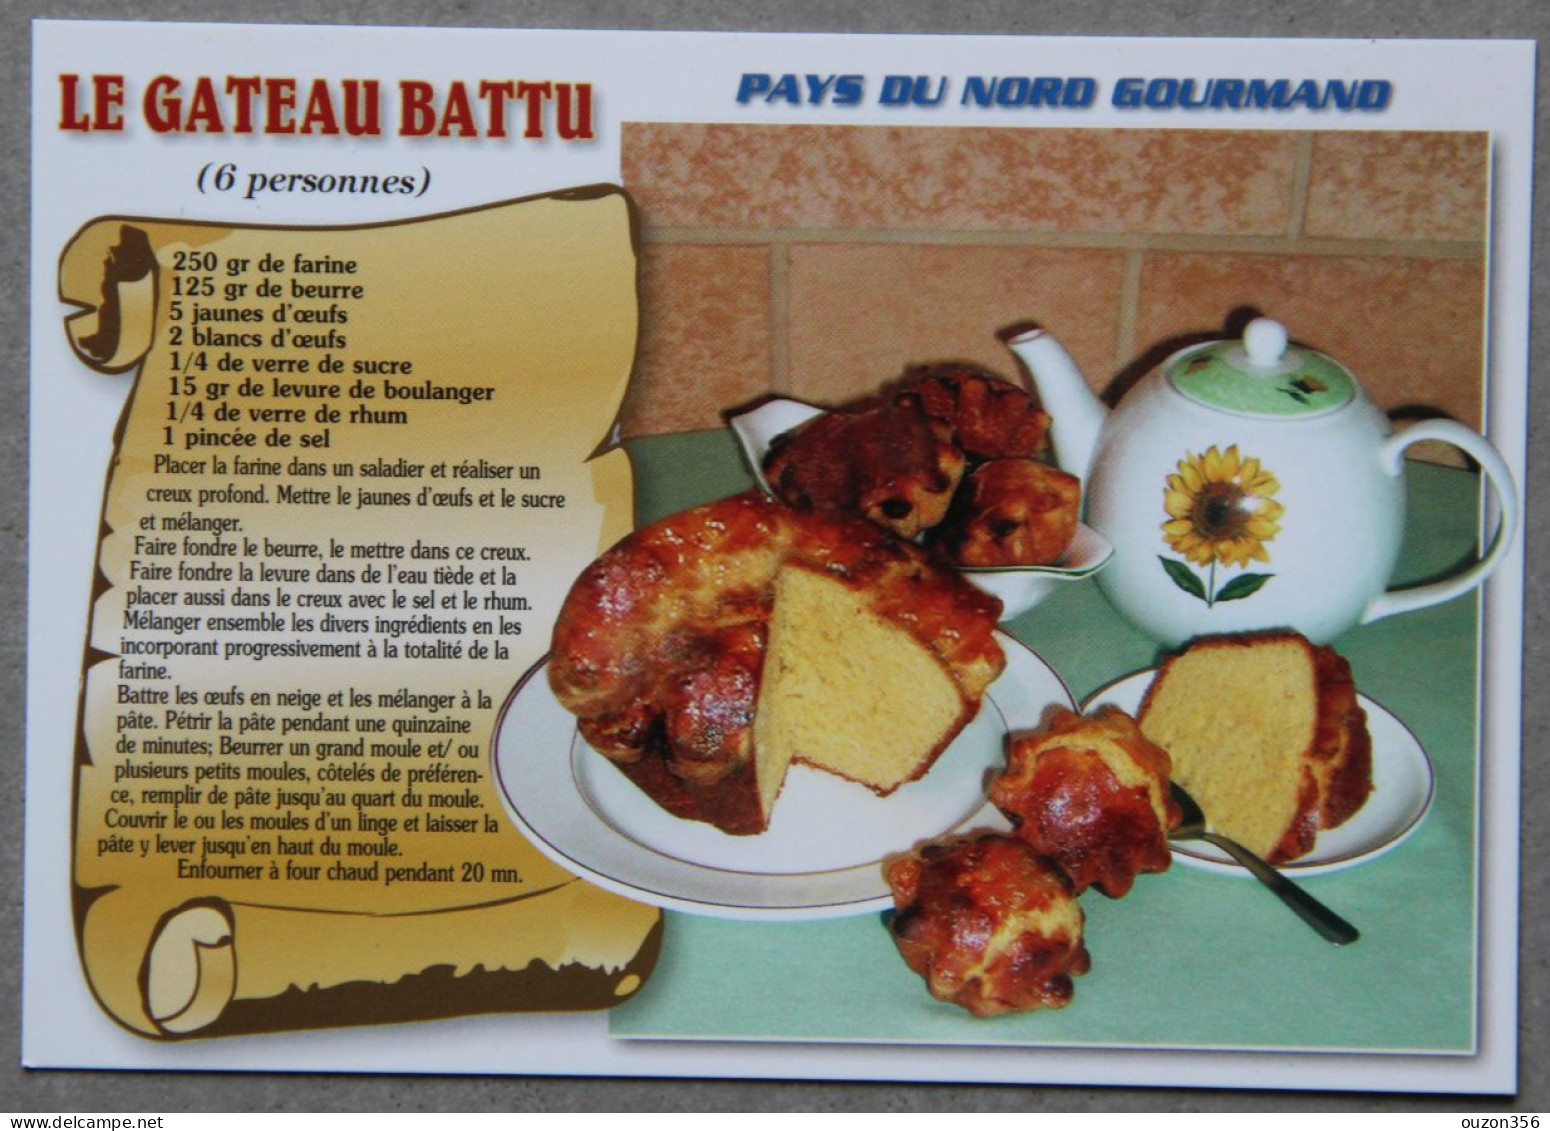 Recette Le Gateau Battu, Pays Du Nord Gourmand - Recepten (kook)